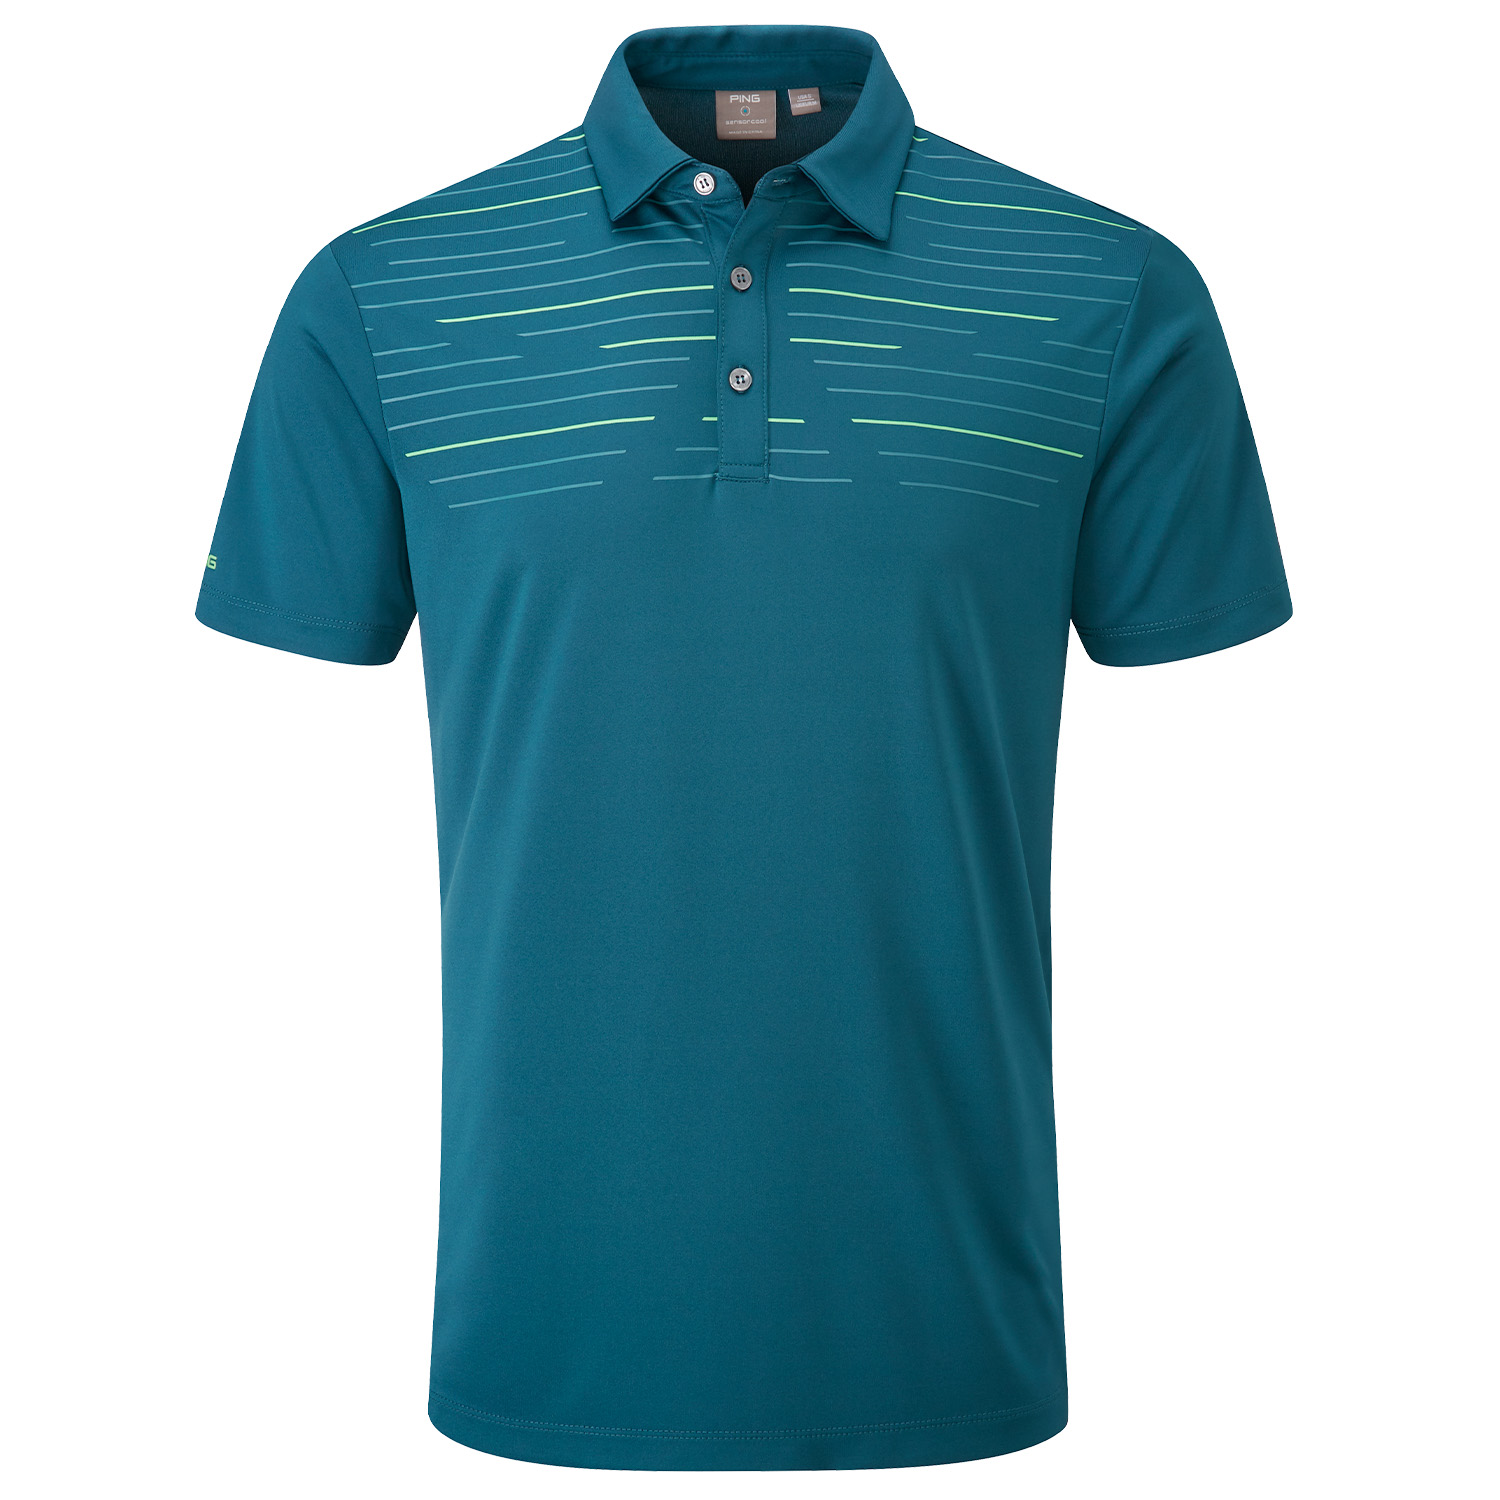 PING Portman Golf Polo Shirt